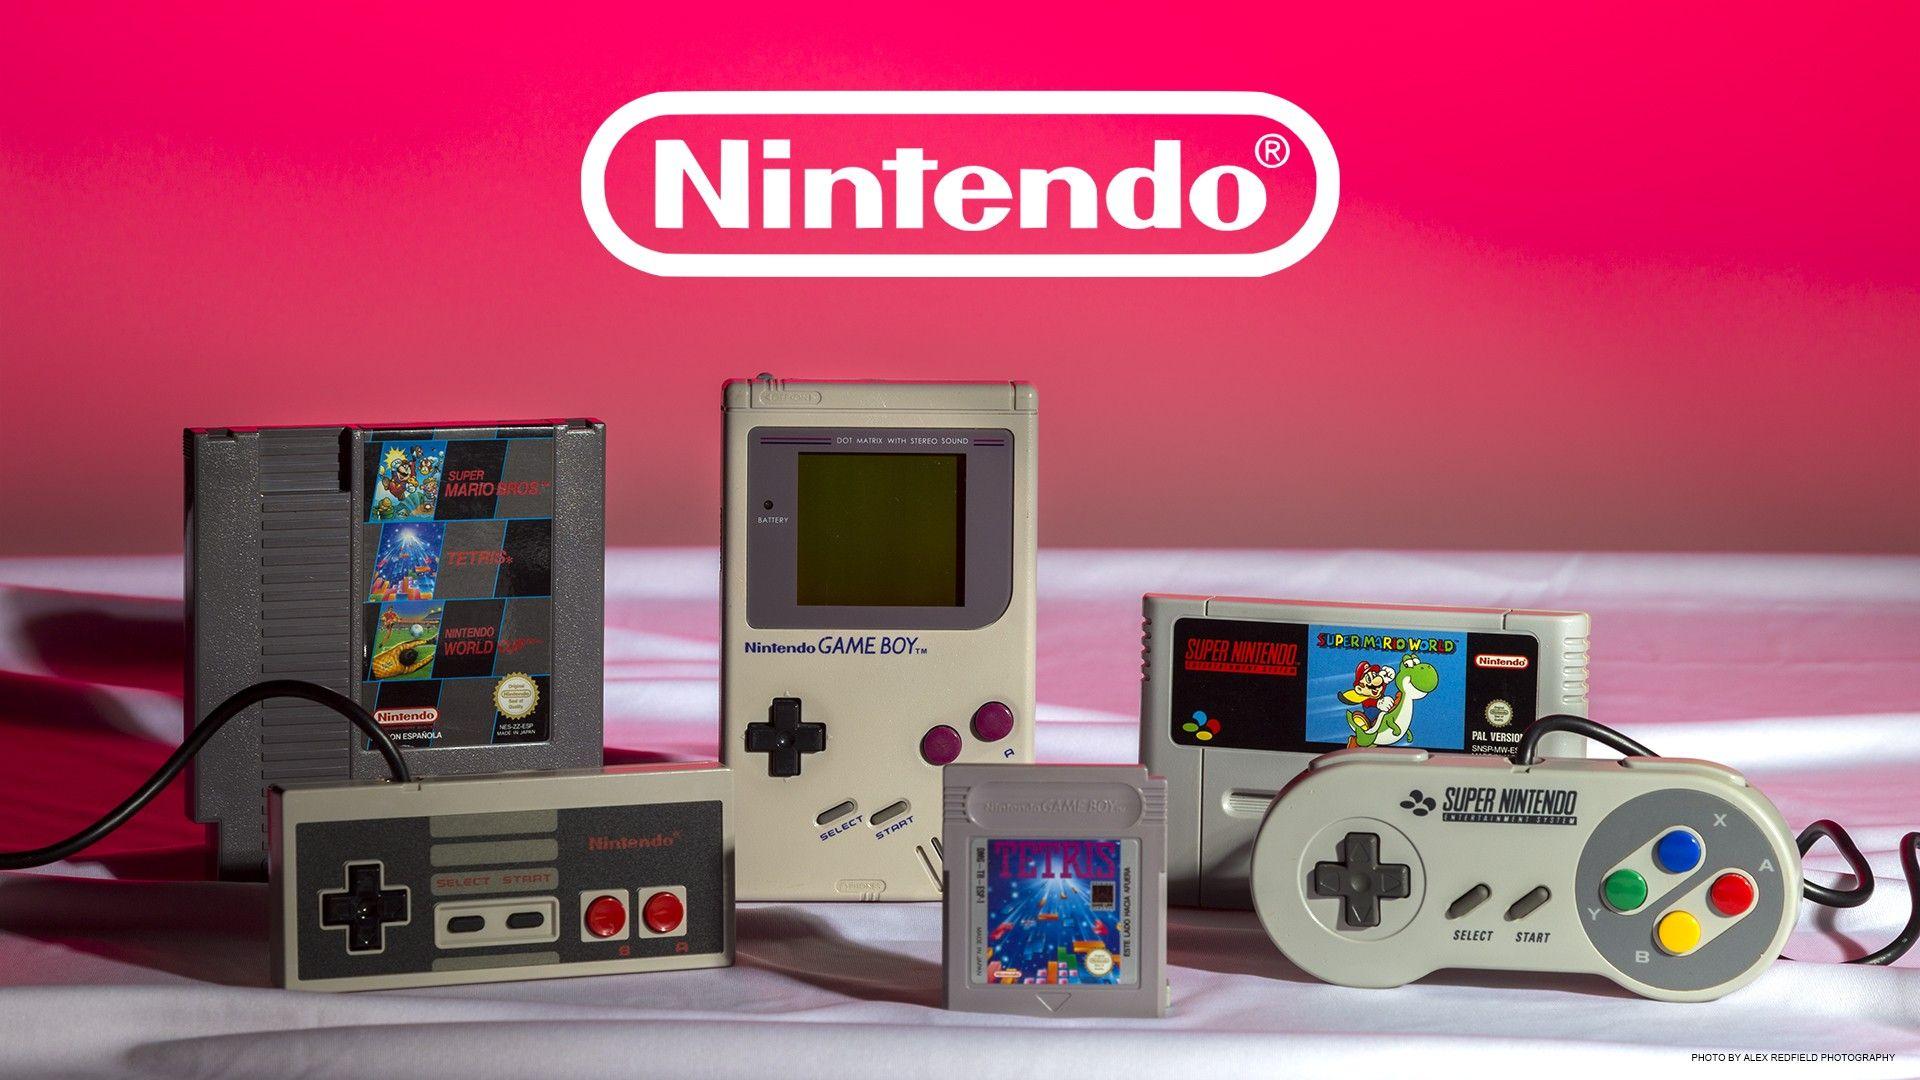 Rcm nintendo. Ретро приставка Нинтендо. Приставка консоль Nintendo NES. Приставка Нинтендо 1994. Игровая приставка супер 8 бит Нинтендо.